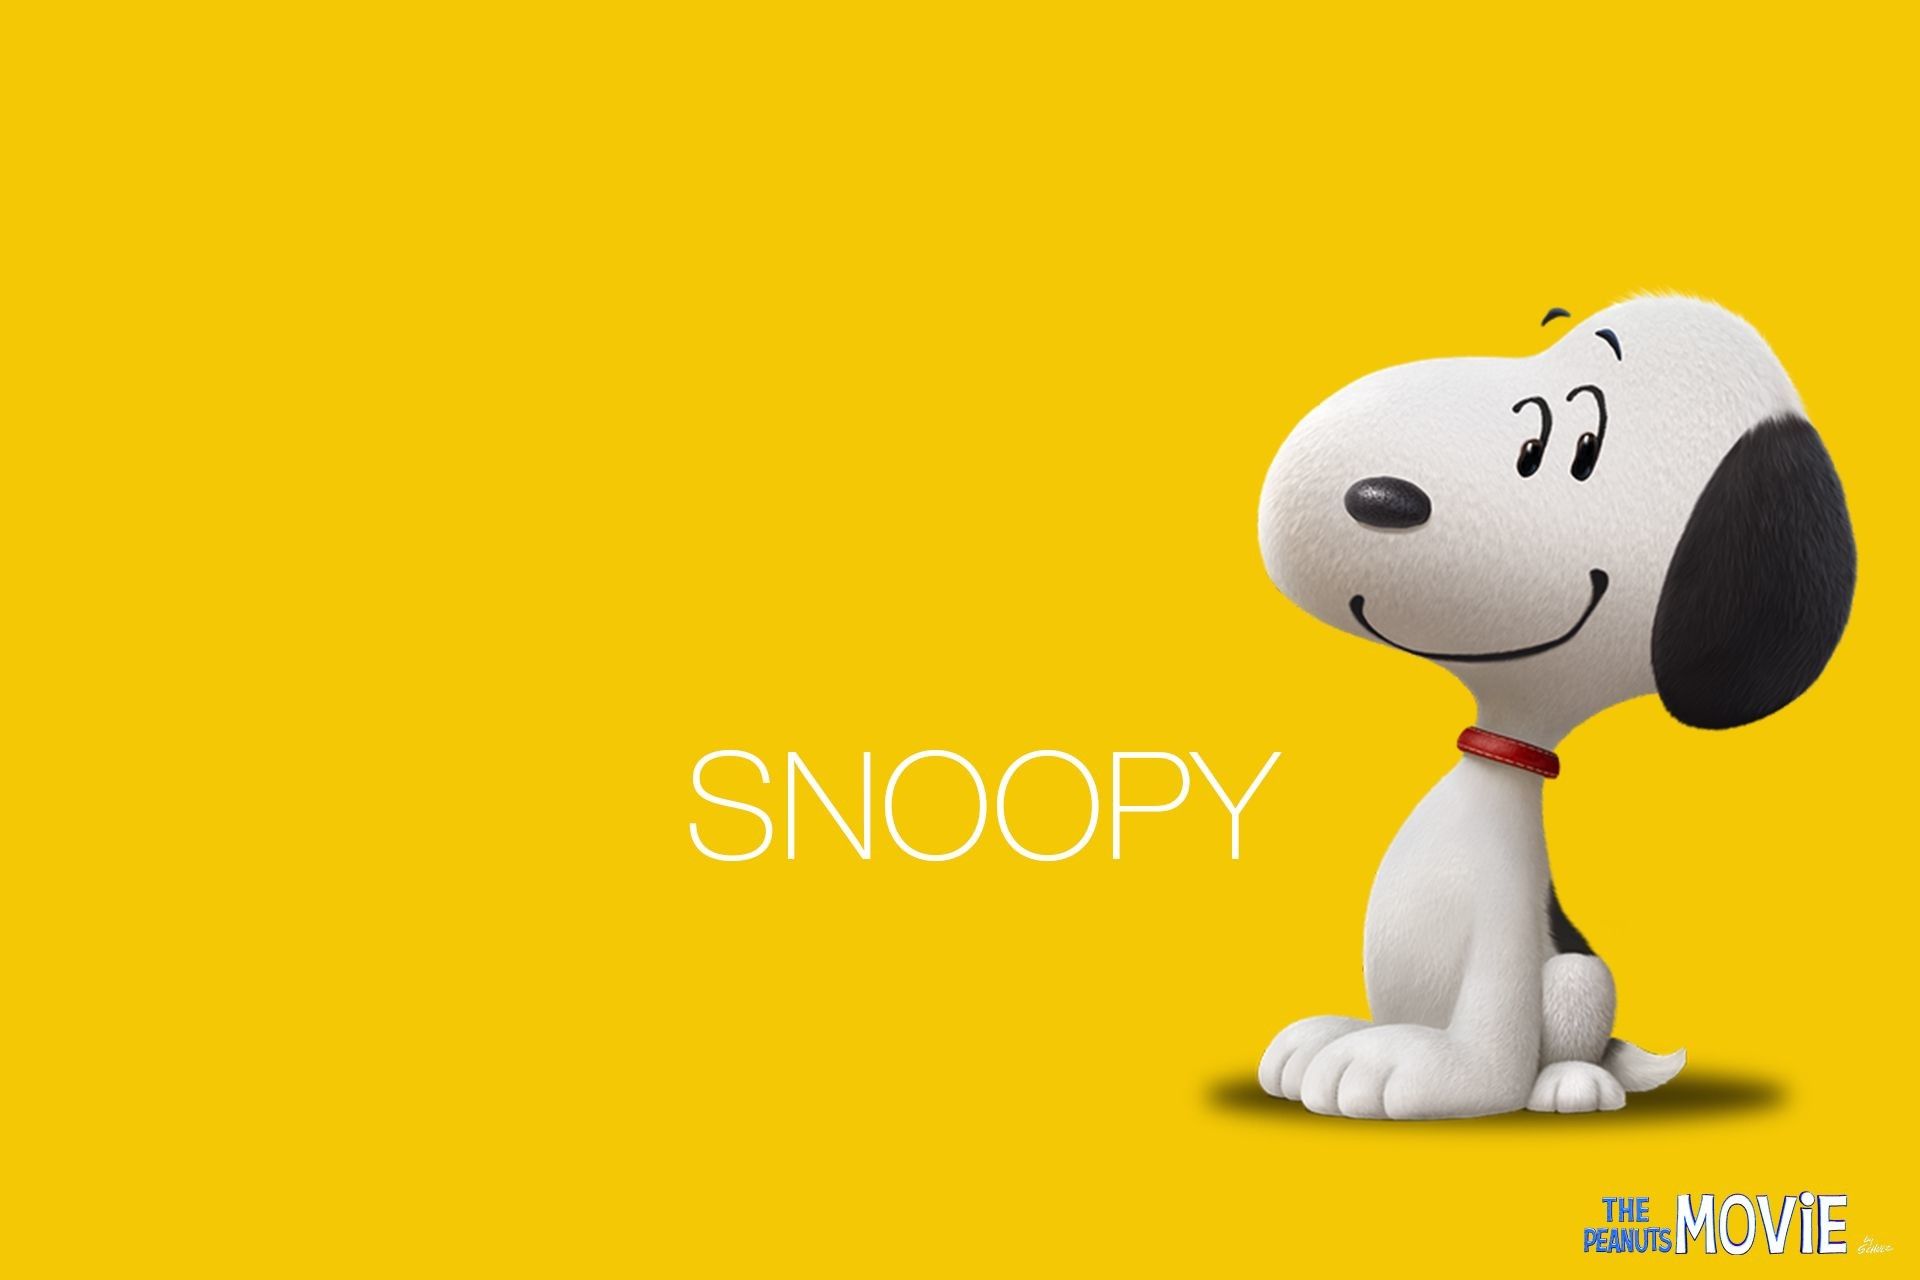 Snoopy Desktop Wallpaper. Snoopy wallpaper, Snoopy, Snoopy image